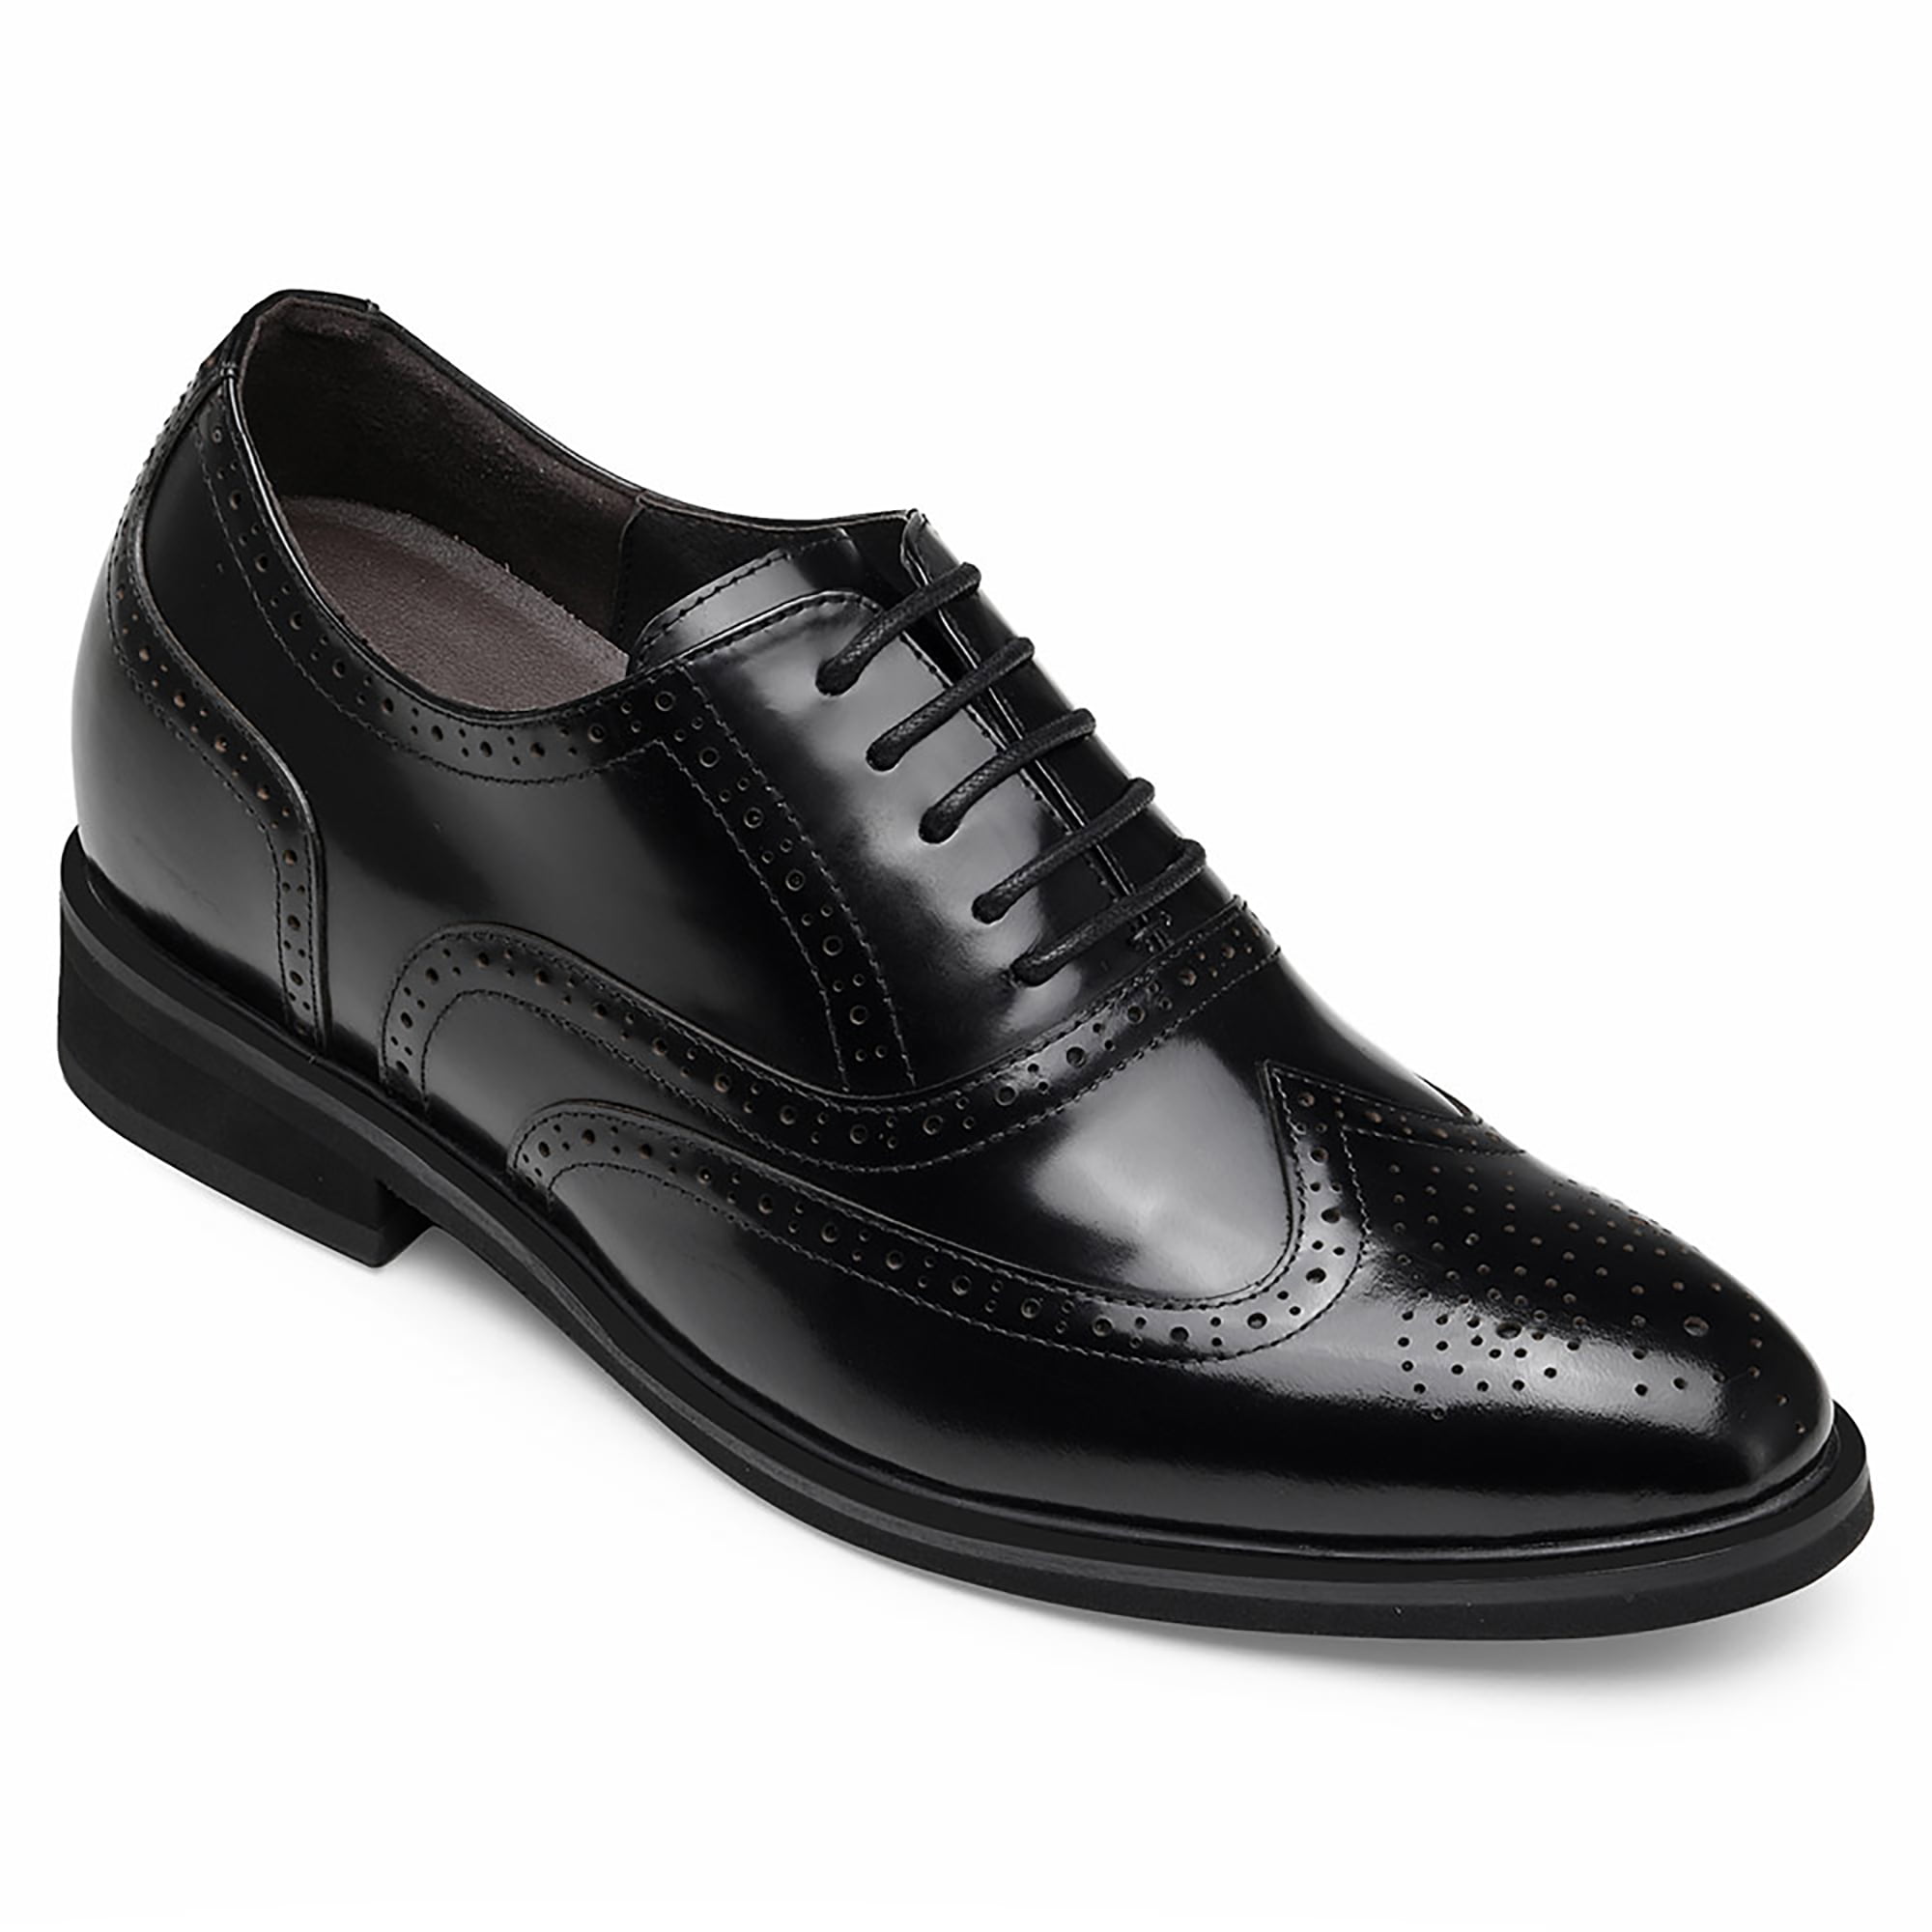 CMR CHAMARIPA Men's Elevator Shoes Oxford Brogues Dress Shoes Calf ...